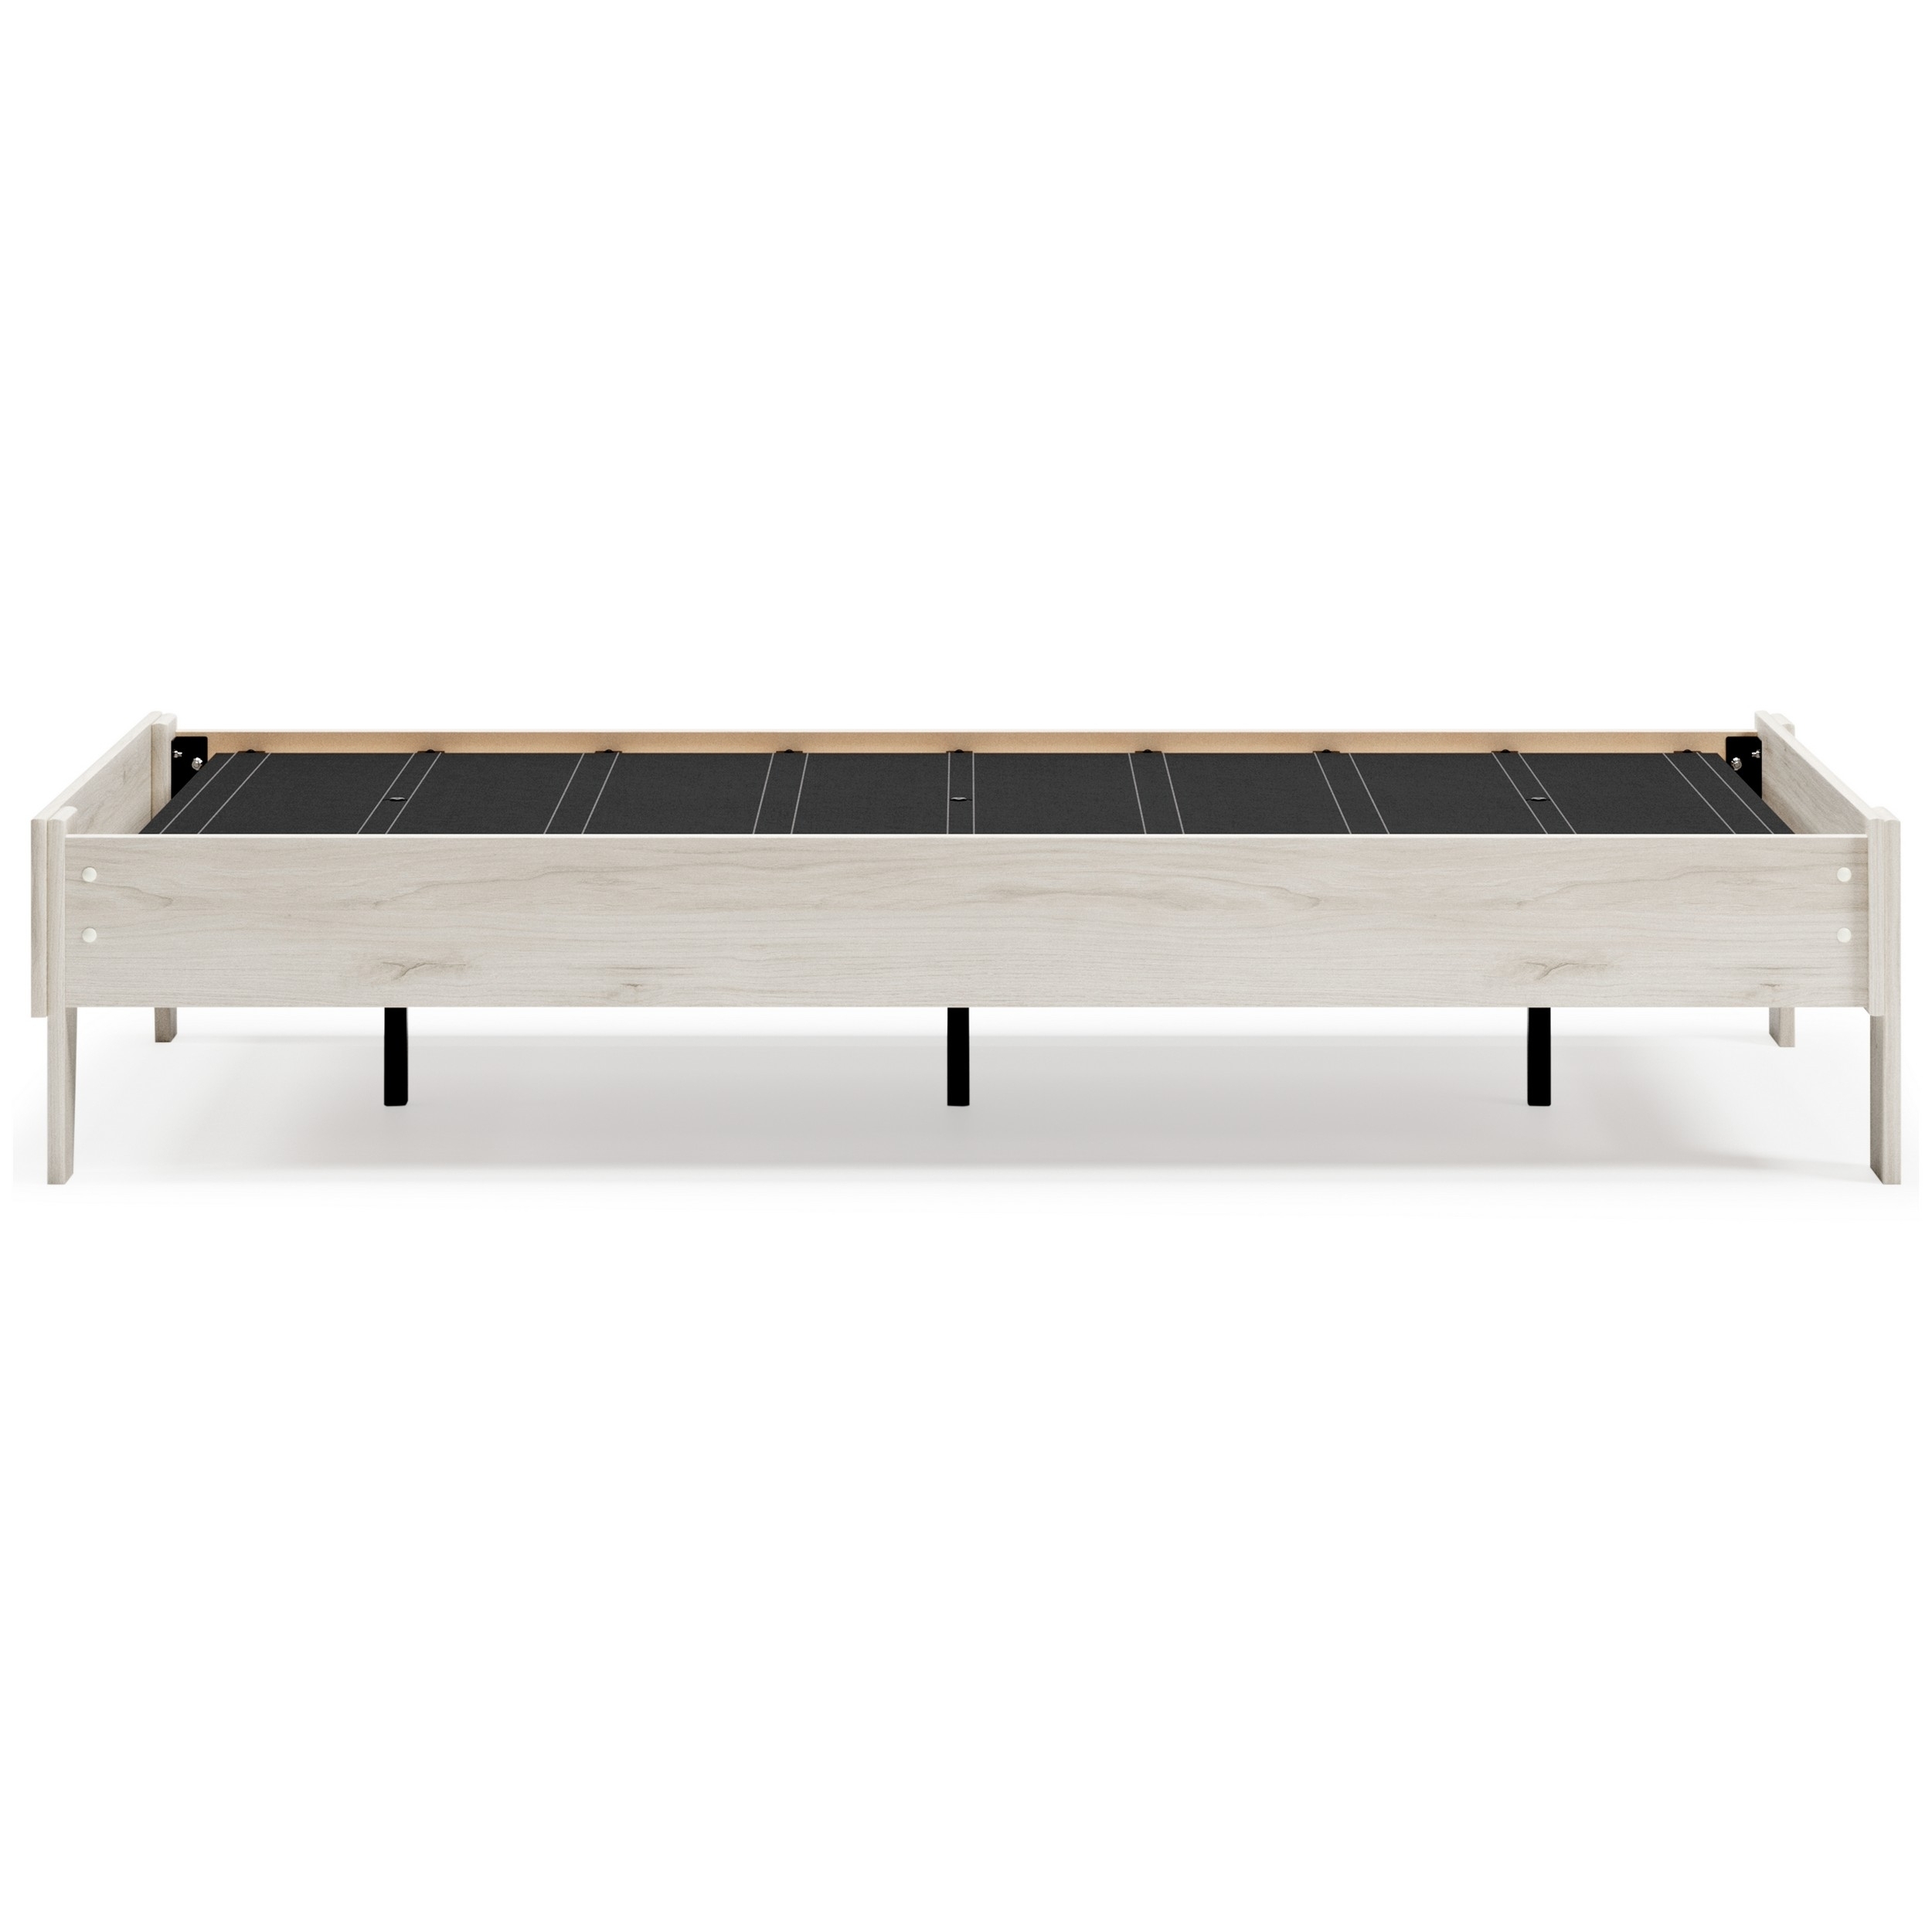 Wooden Twin Platform Bed With Grains, Off White- Saltoro Sherpi